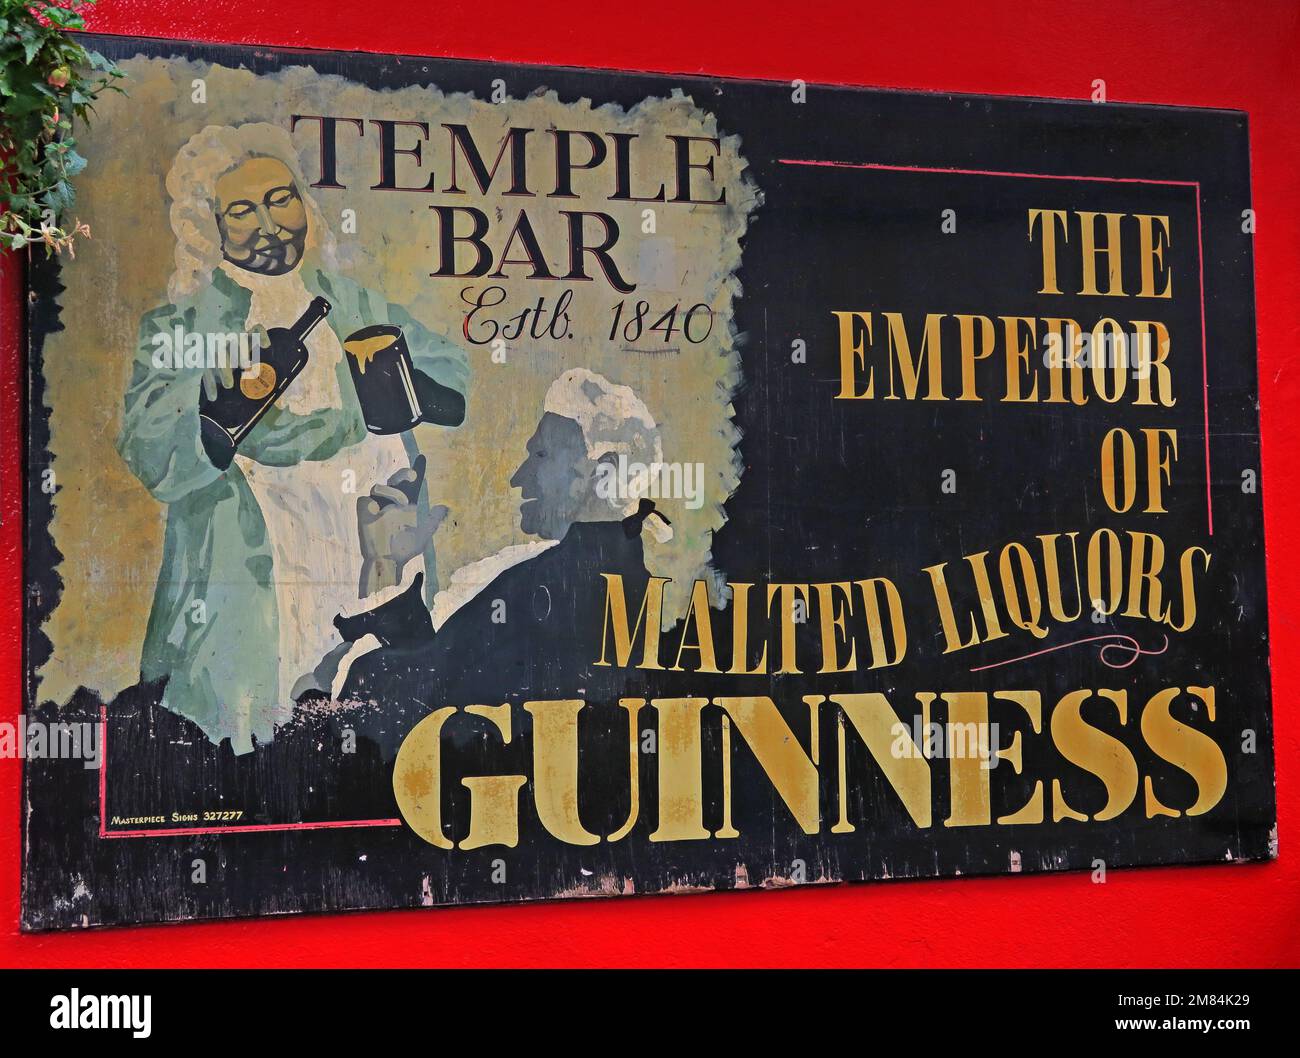 Guinness Emperor of Malted Liquors, al Temple Bar, Dublino, Est 1840, 47-48 Temple Bar, Dublino 2, D02 N725, Eire, Irlanda Foto Stock